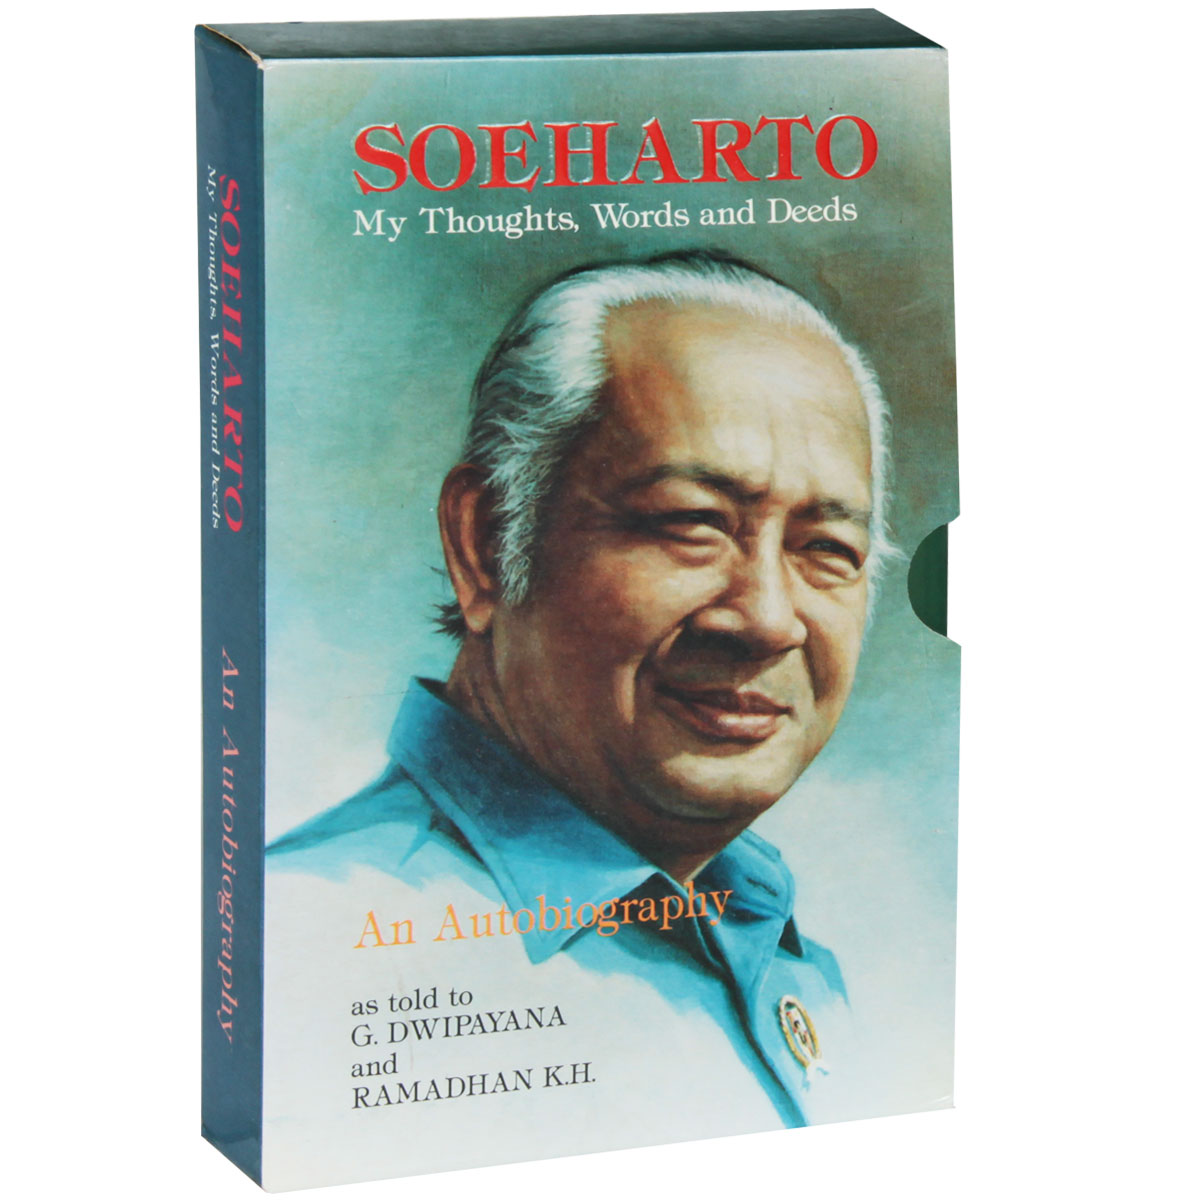 Soeharto: My Thoughts, Words and Deeds